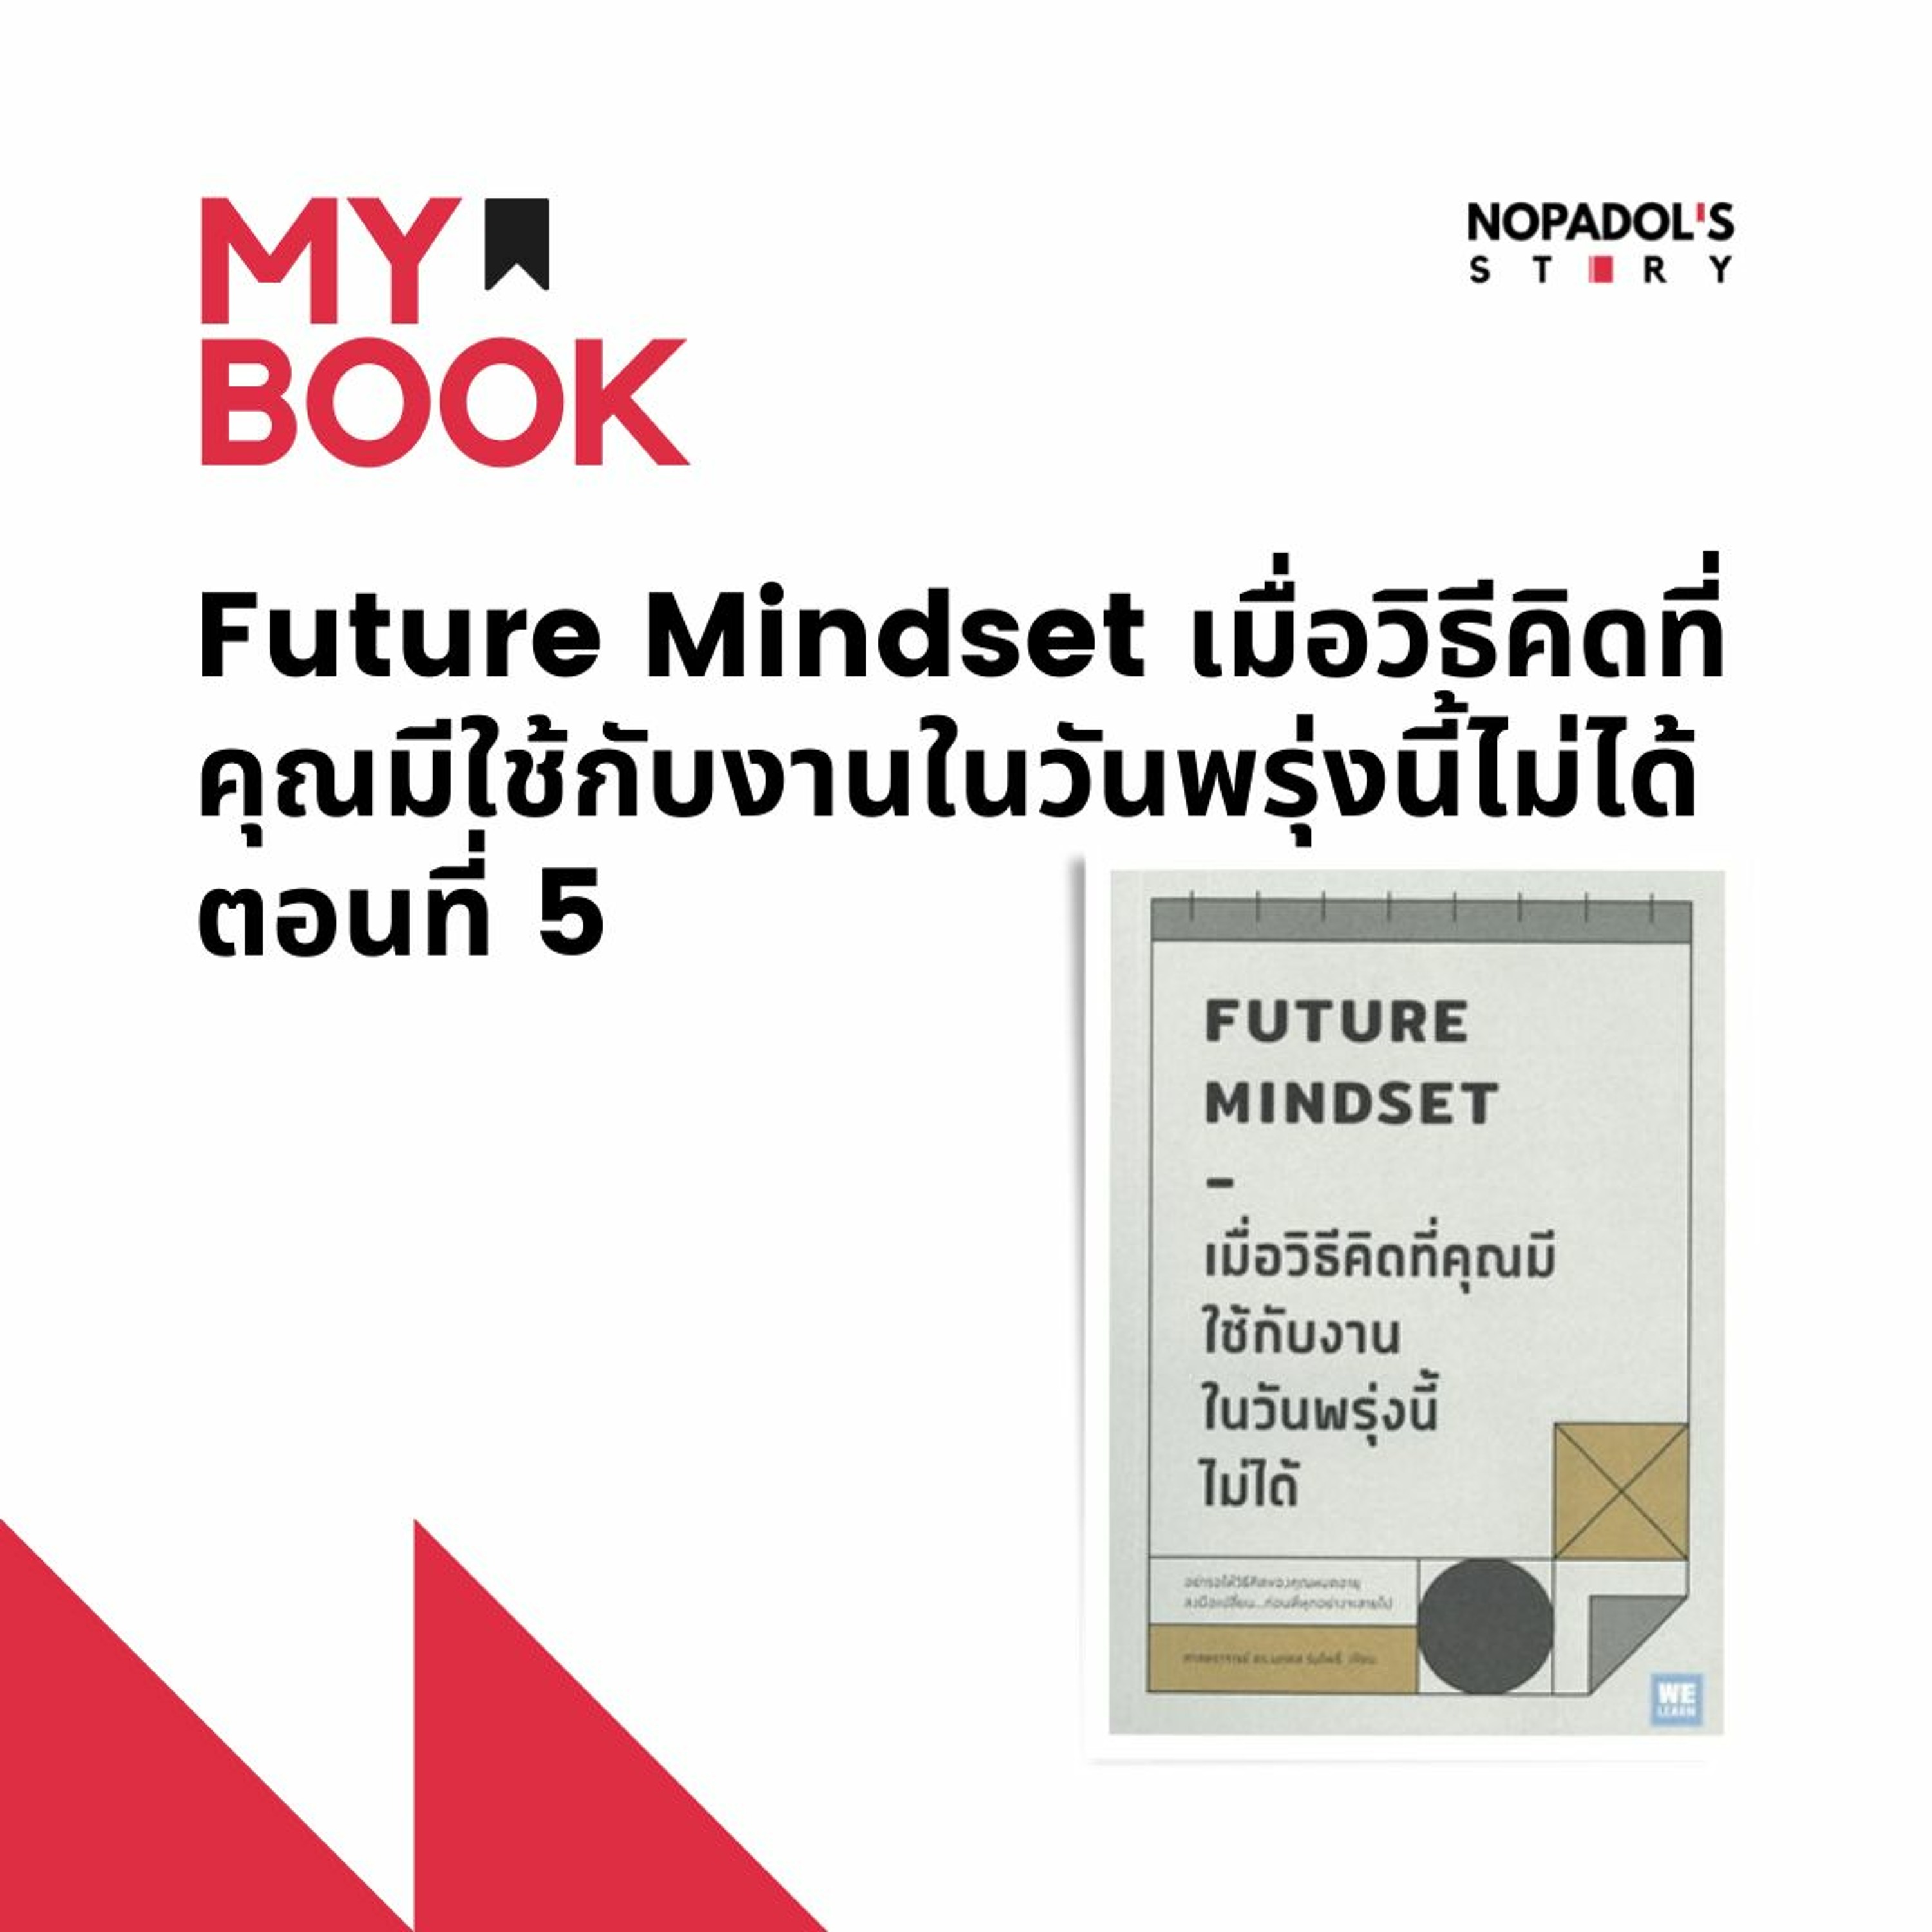 EP 1300 (MB 56) Future Mindset เมื่อวิธีคิดที่คุณมีใช้กับงานในวันพรุ่งนี้ไม่ได้ ตอนที่ 5